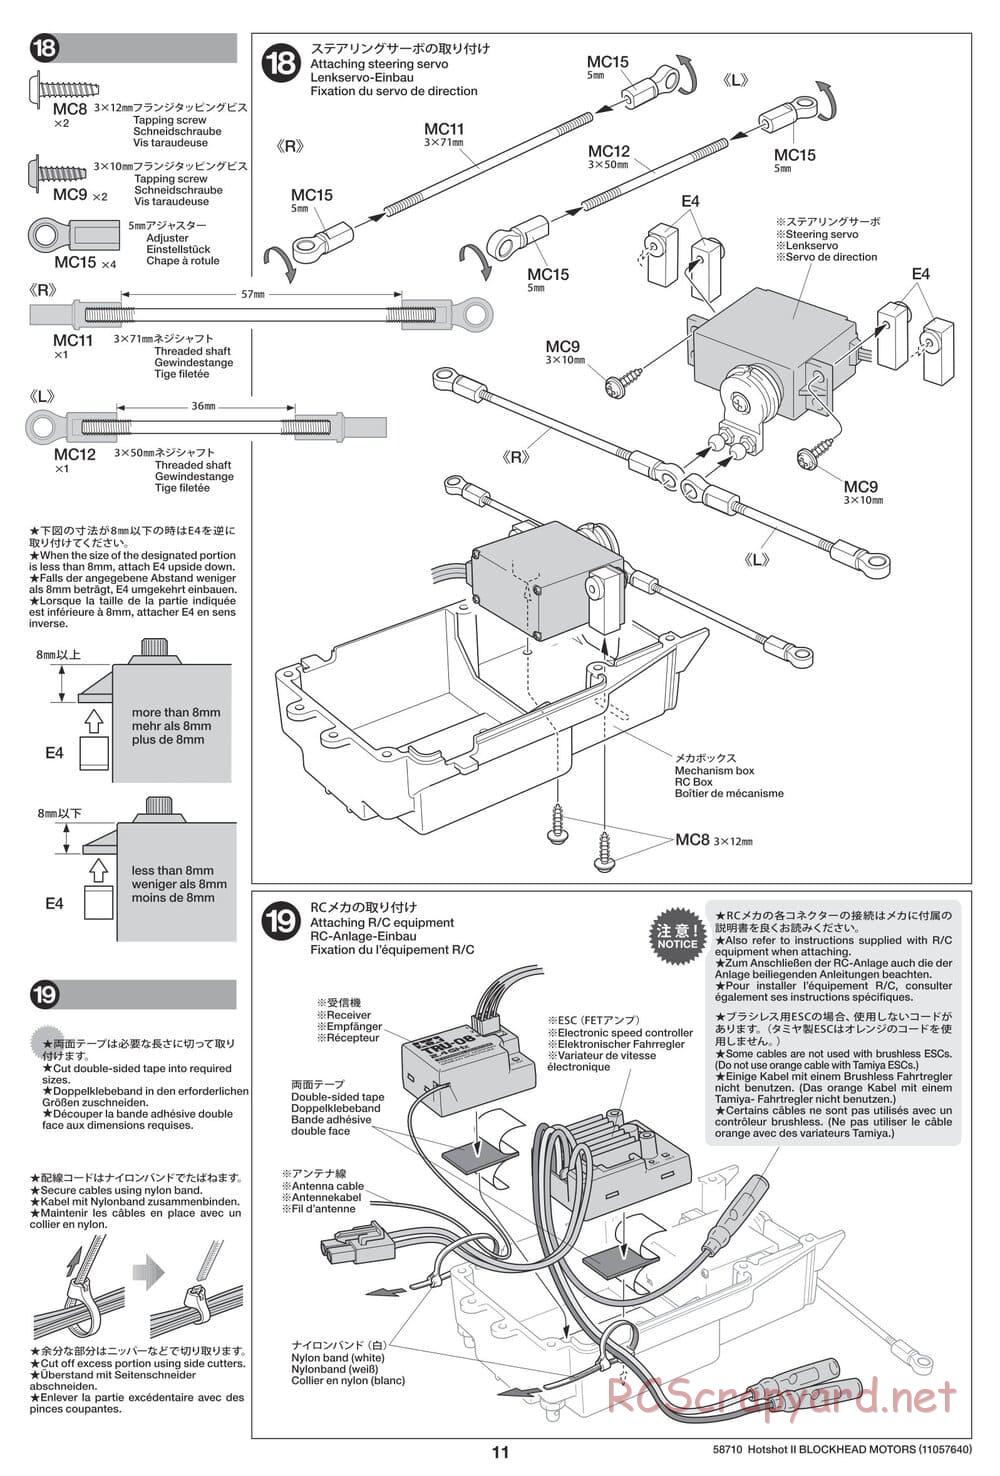 Tamiya - Hotshot II Blockhead Motors - HS Chassis - Manual - Page 11